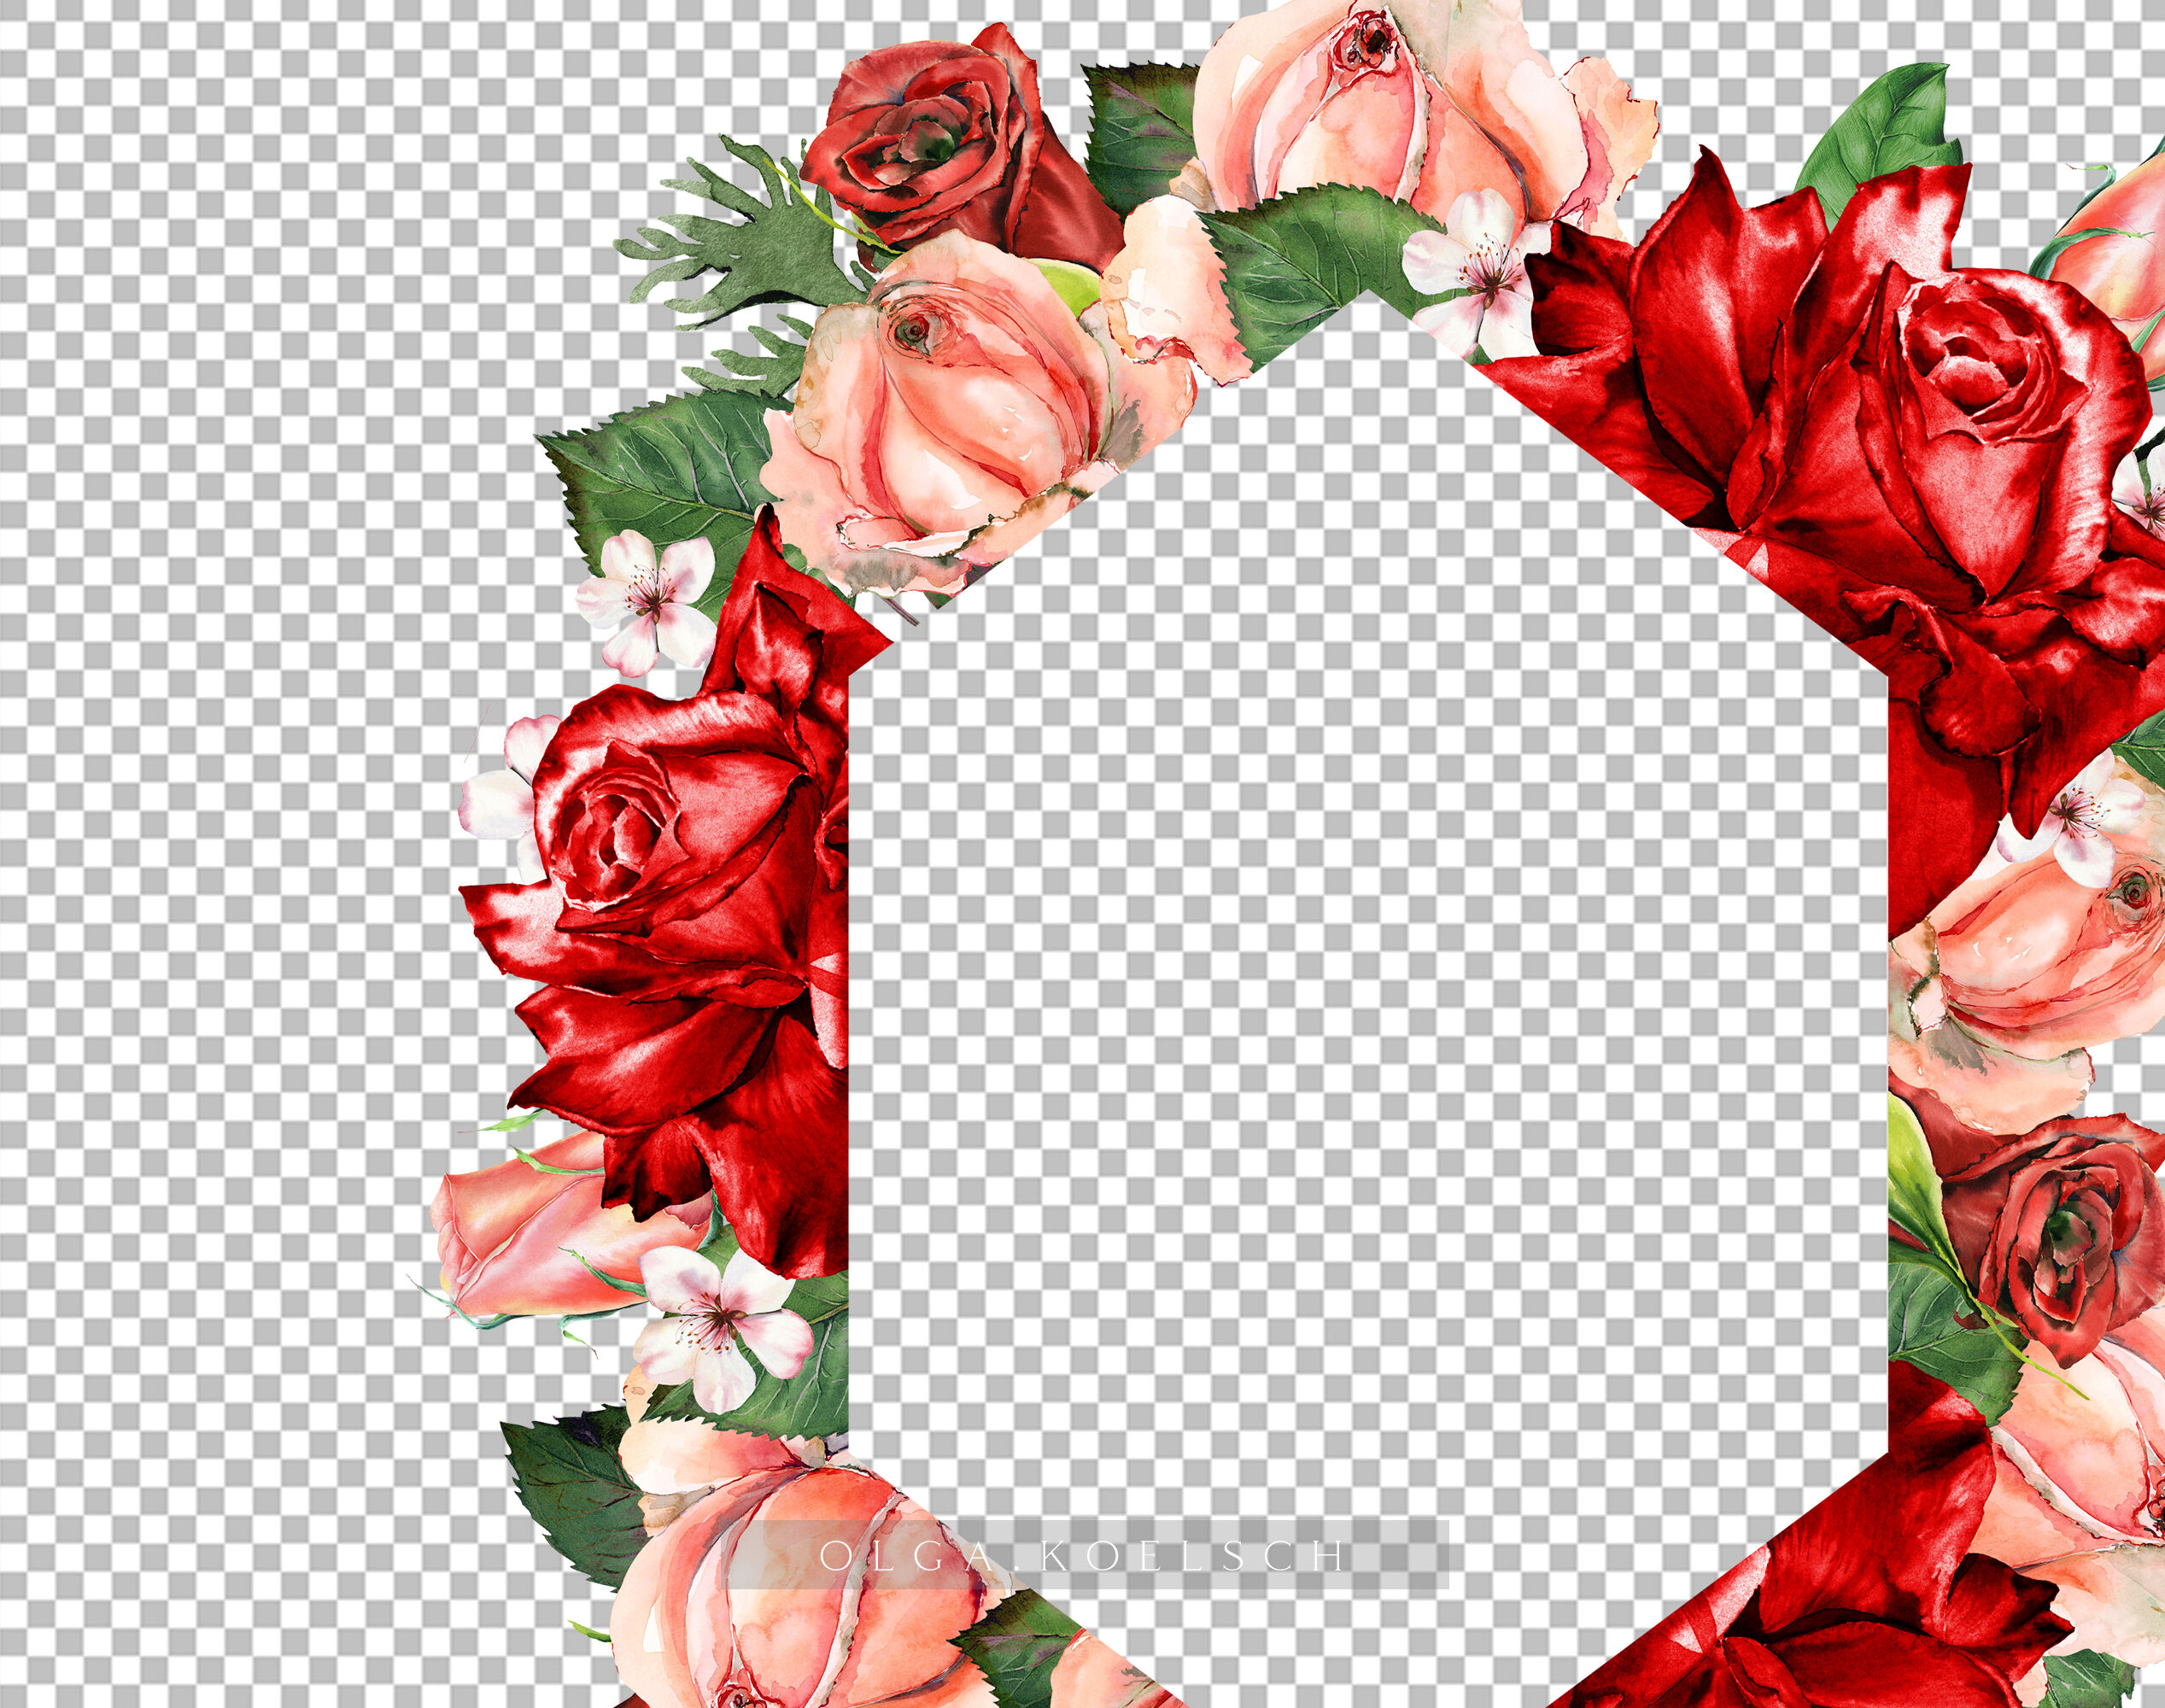 red roses border clip art